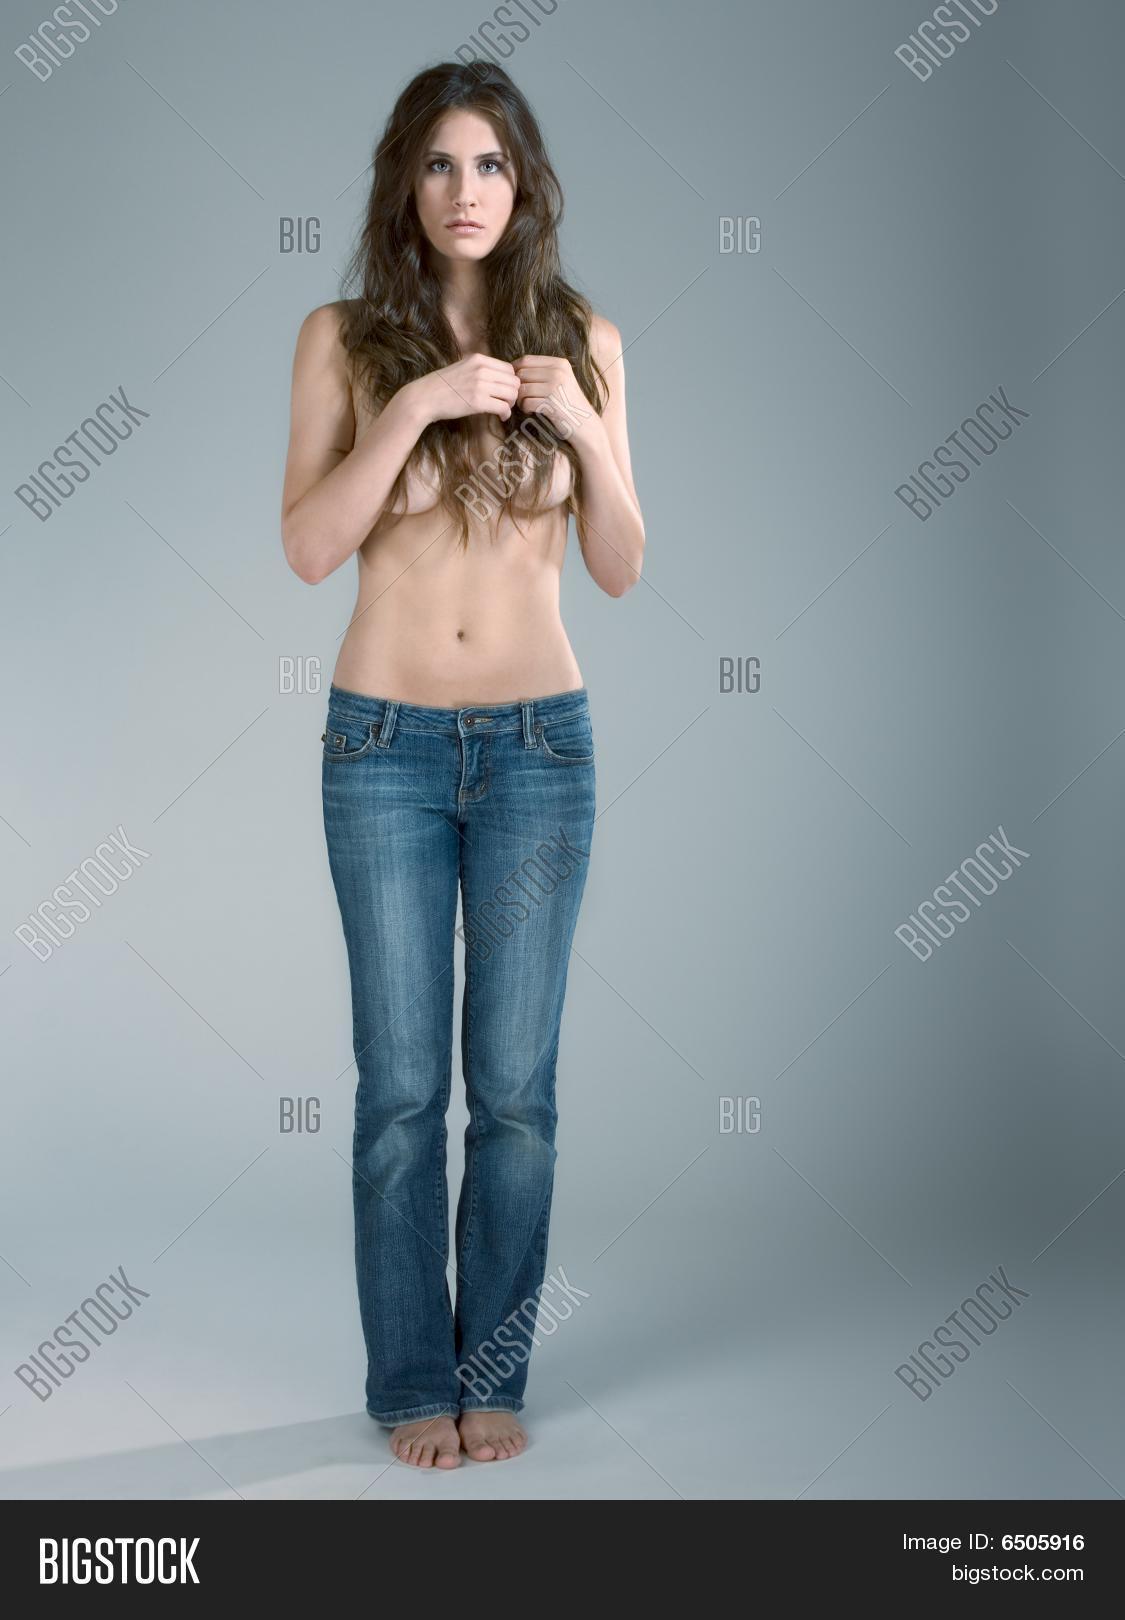 april burruel add photo topless female models